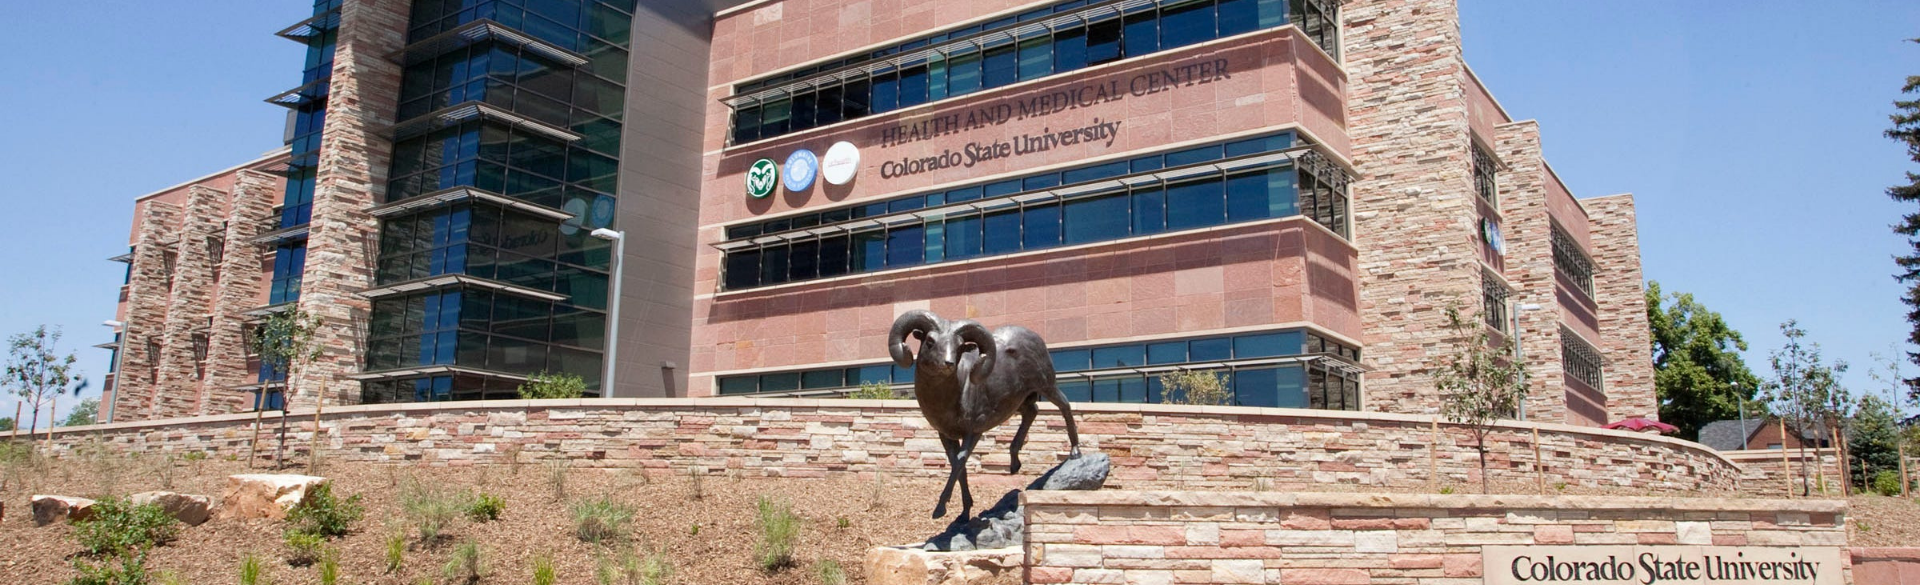 CU School of Medicine at Colorado State University | Fort Collins, CO